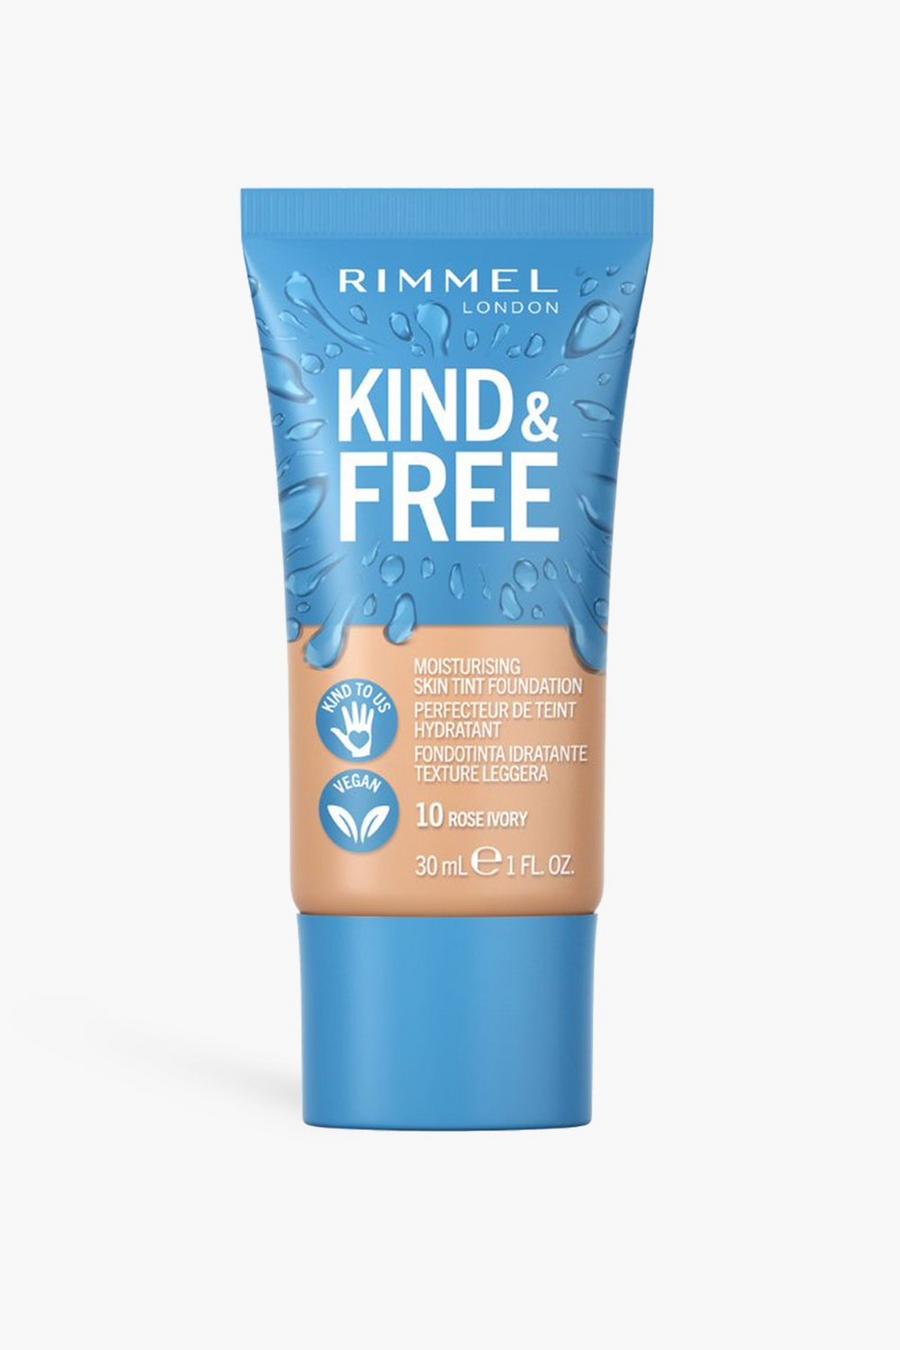 Rimmel Kind & Free Foundation Rose Ivory